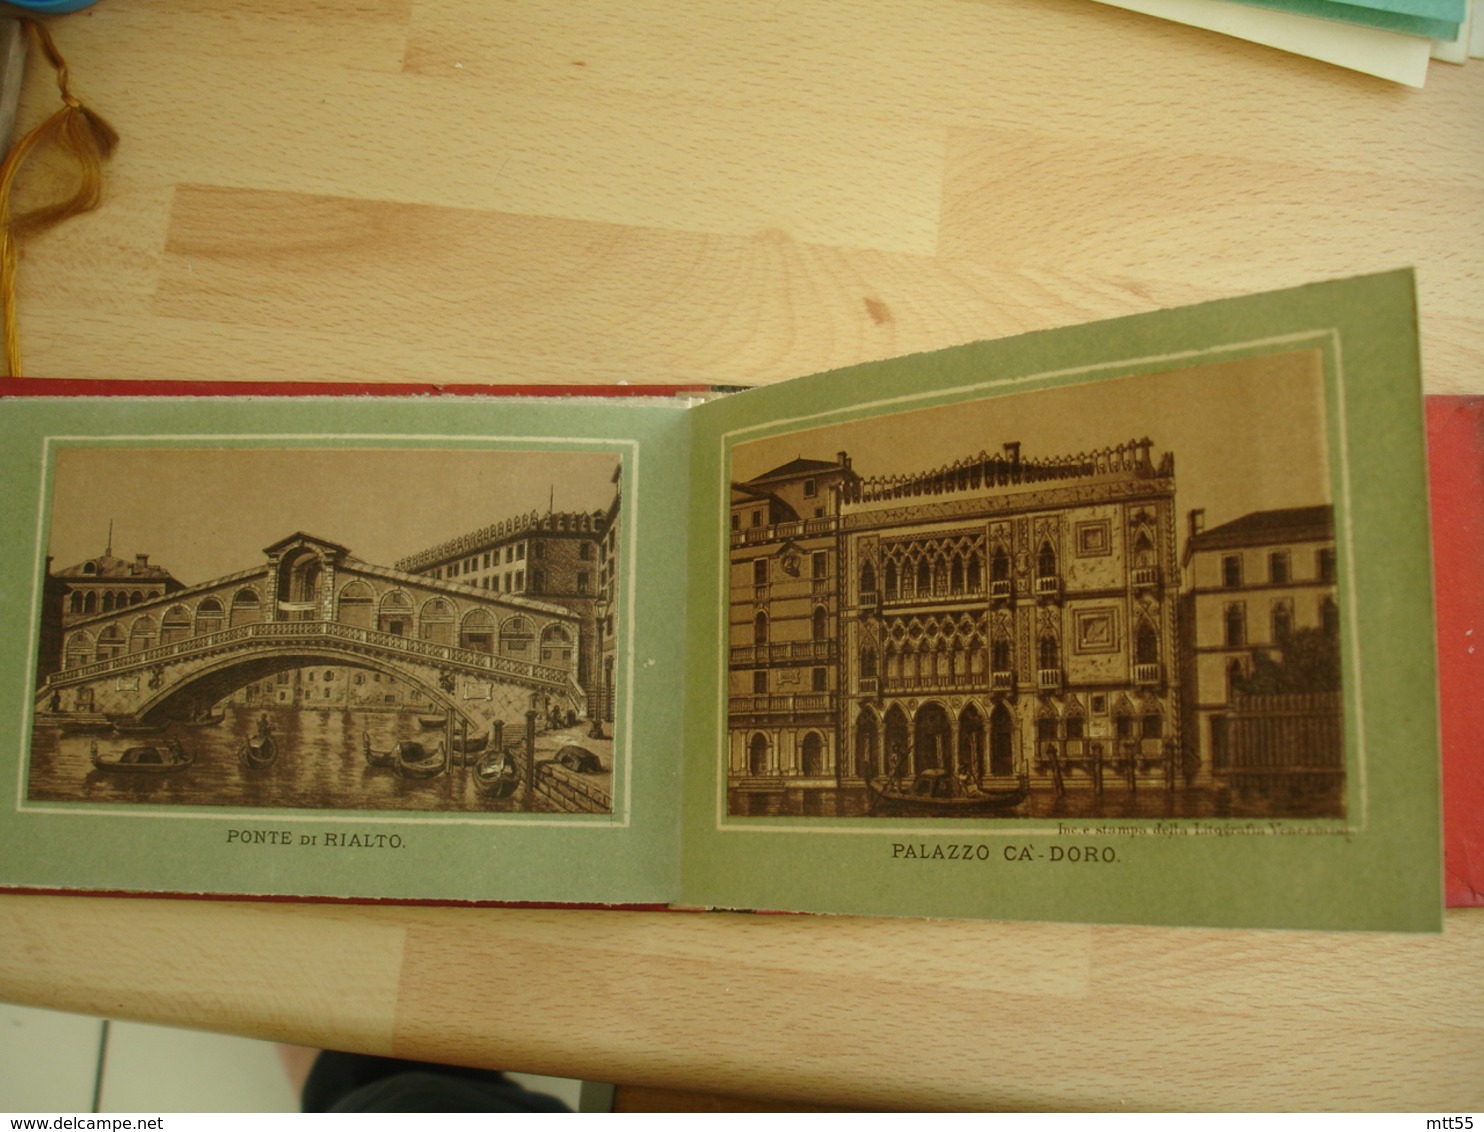 ancien depliant ricordo venezia venise carnet photo vue chromo